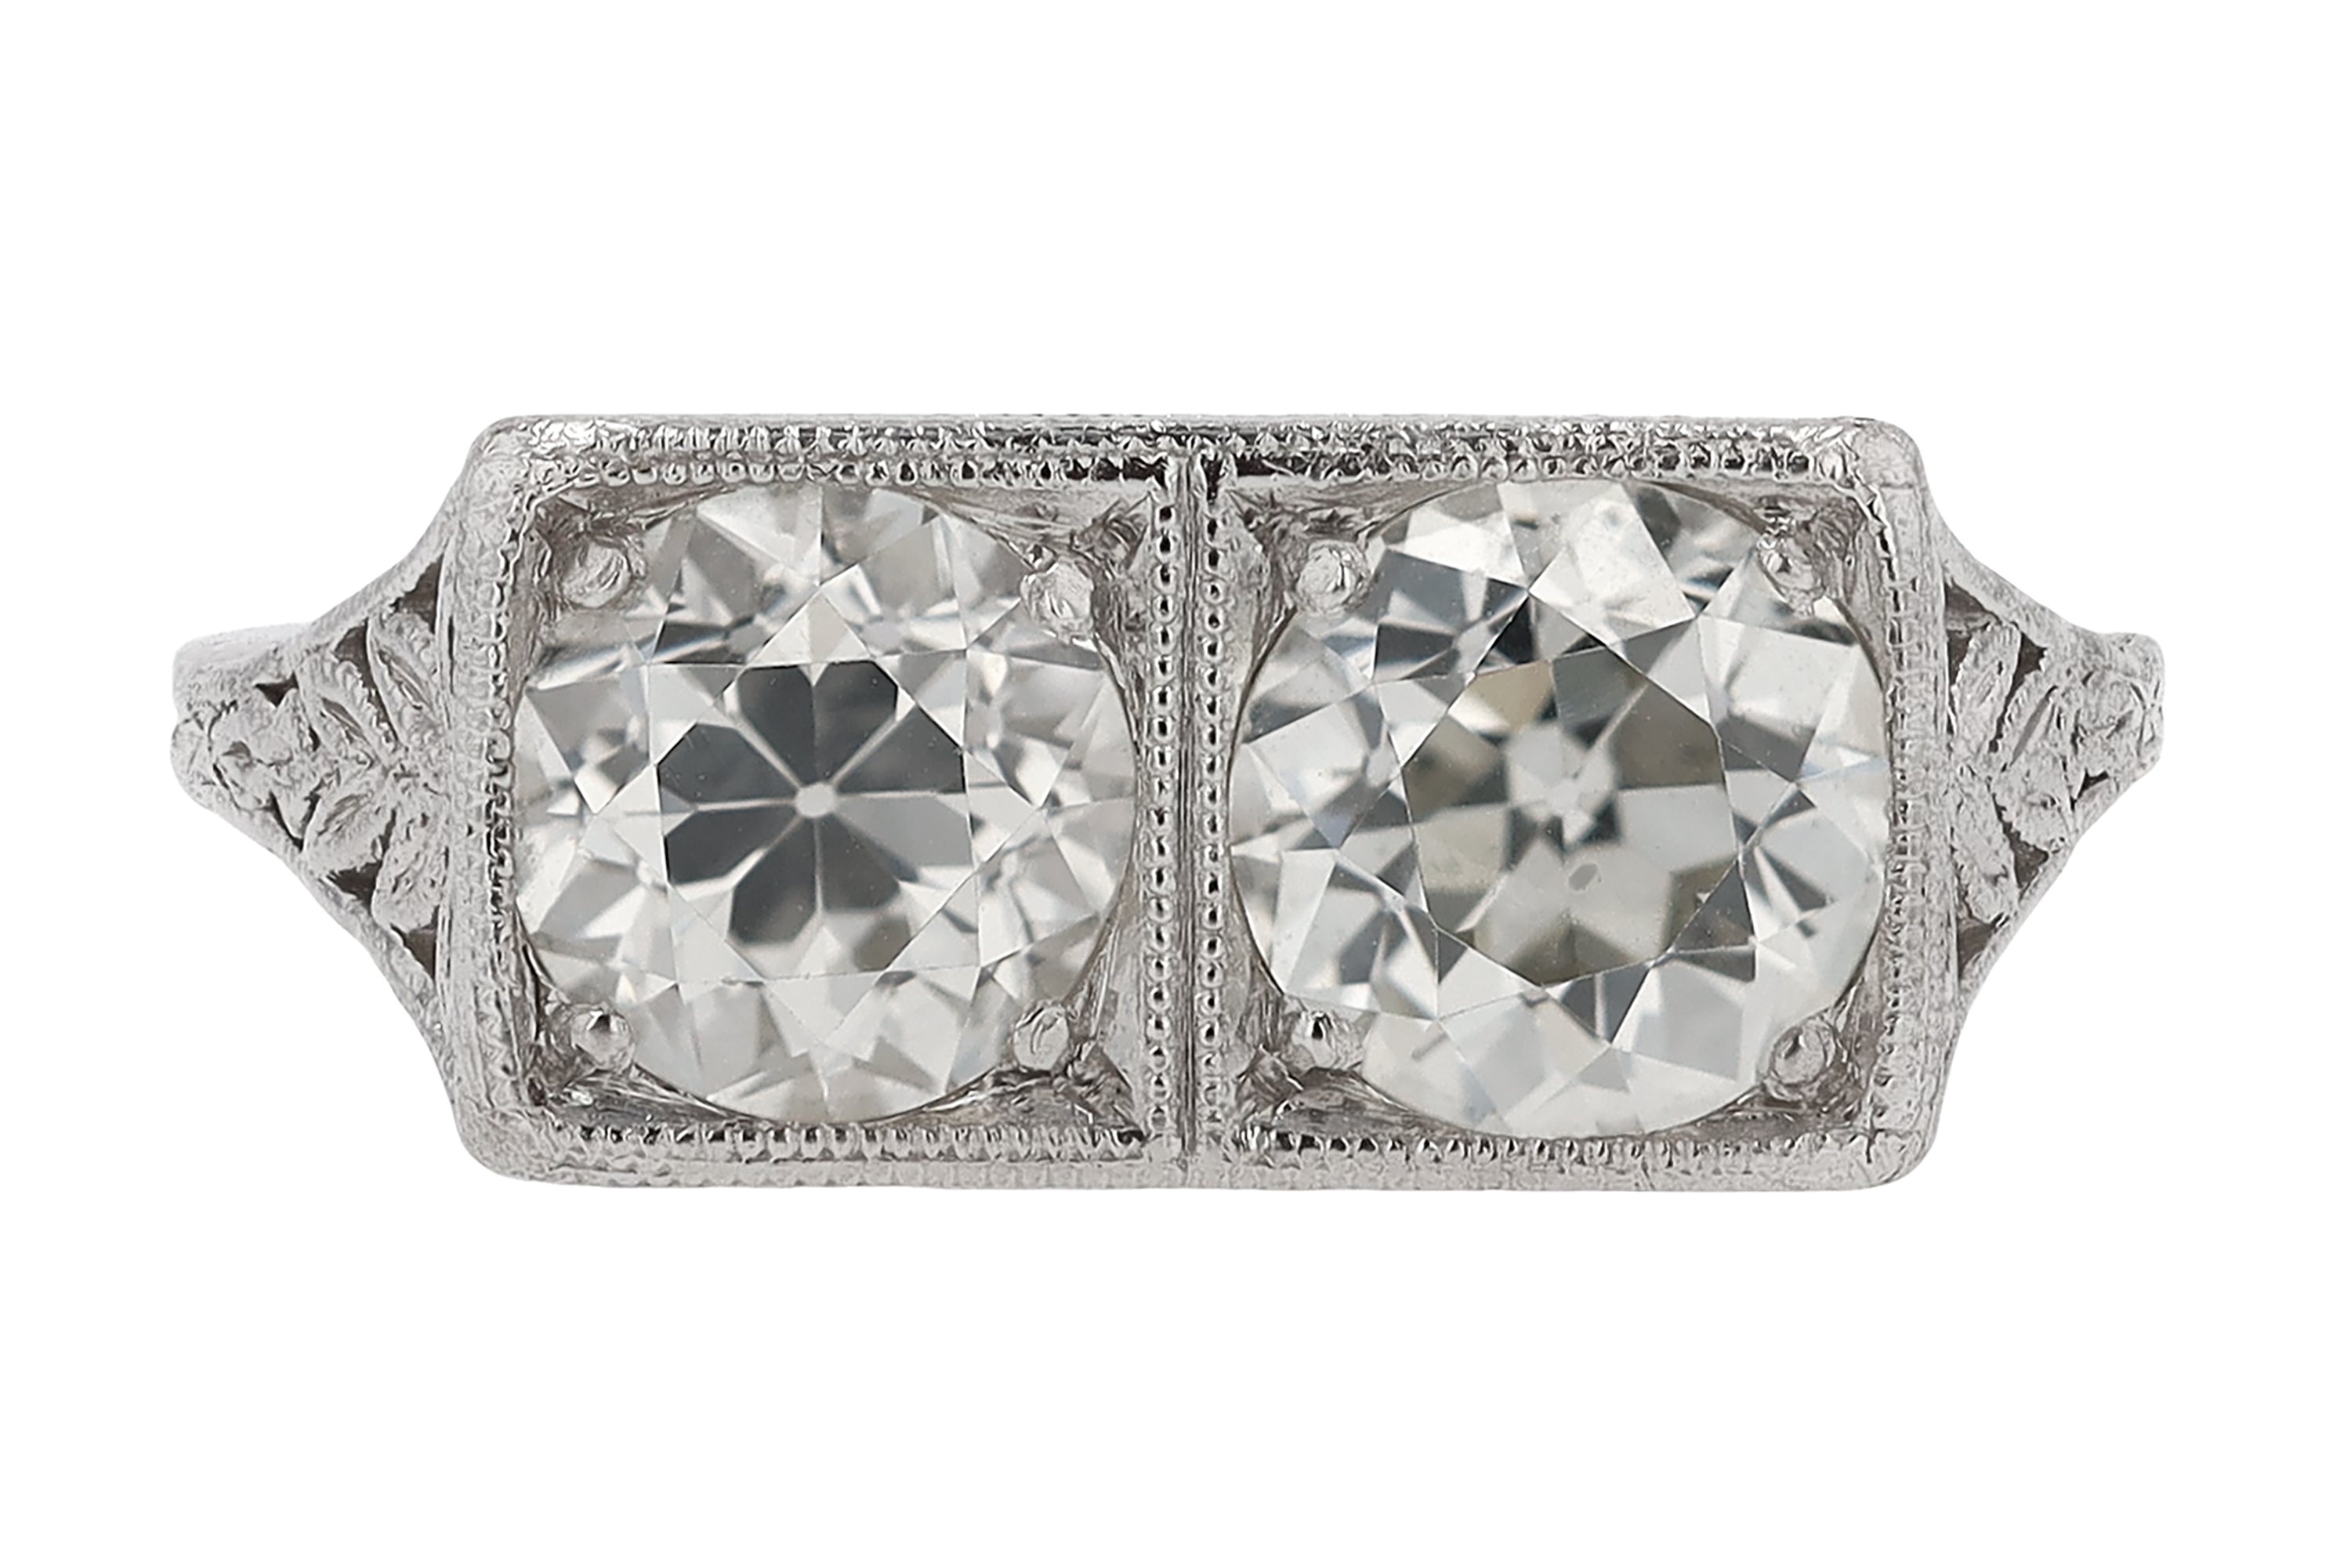 1920s Art Deco 2.10 Carat Double Diamond Engagement Ring